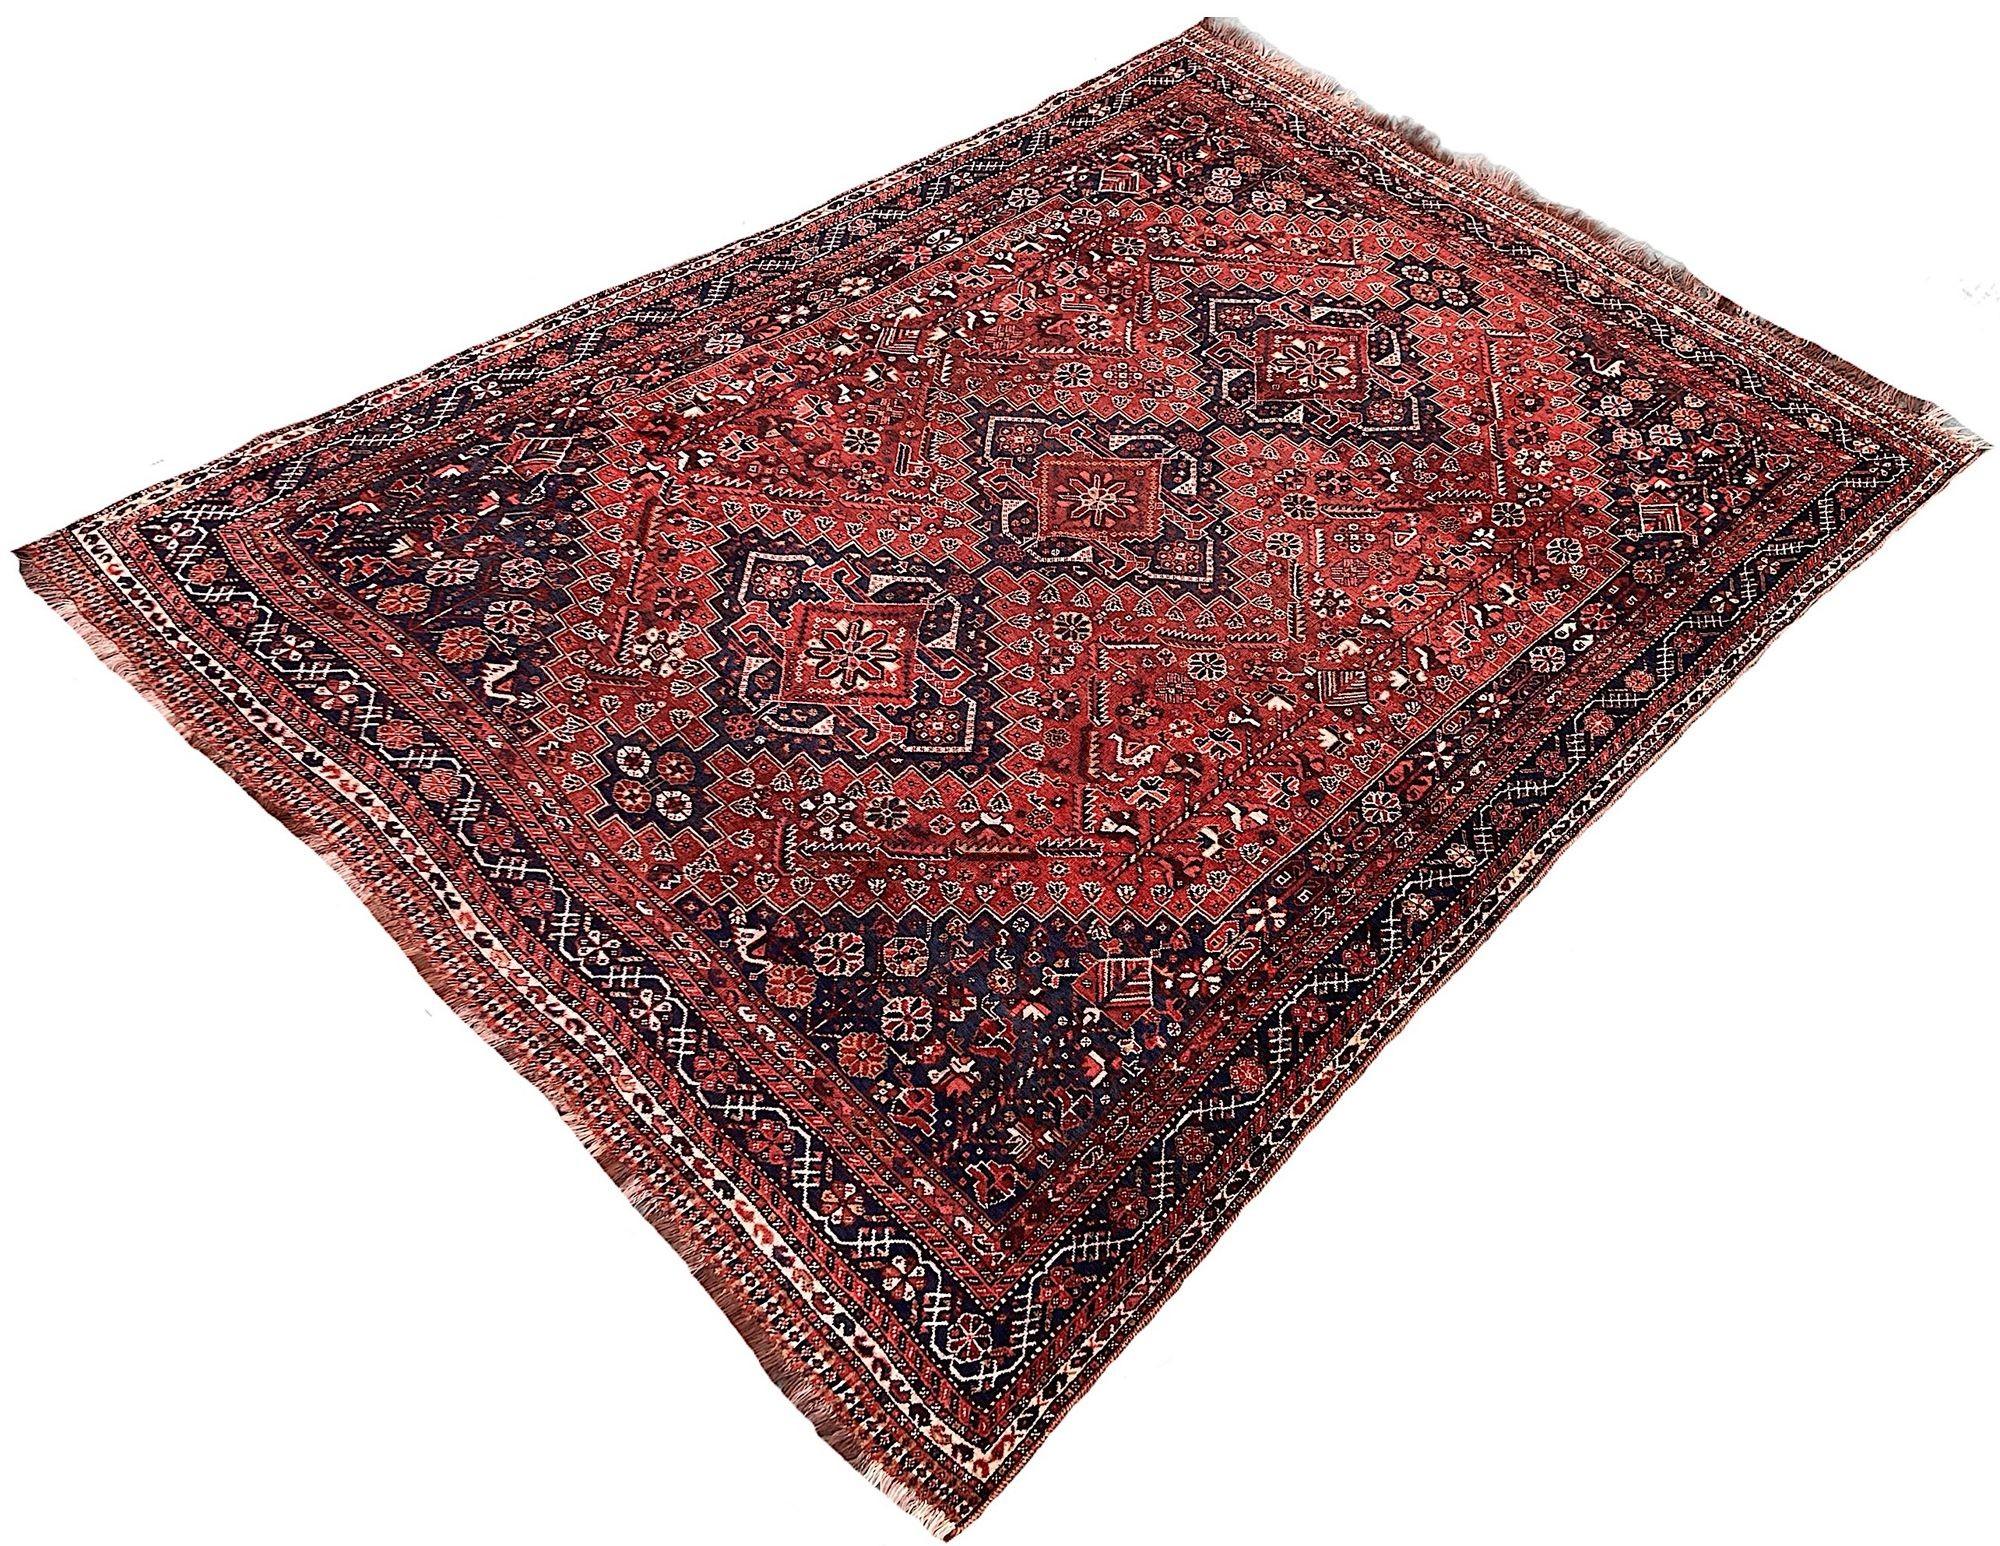 Antique Qashqai Carpet 3.35m x 2.35m In Good Condition For Sale In St. Albans, GB